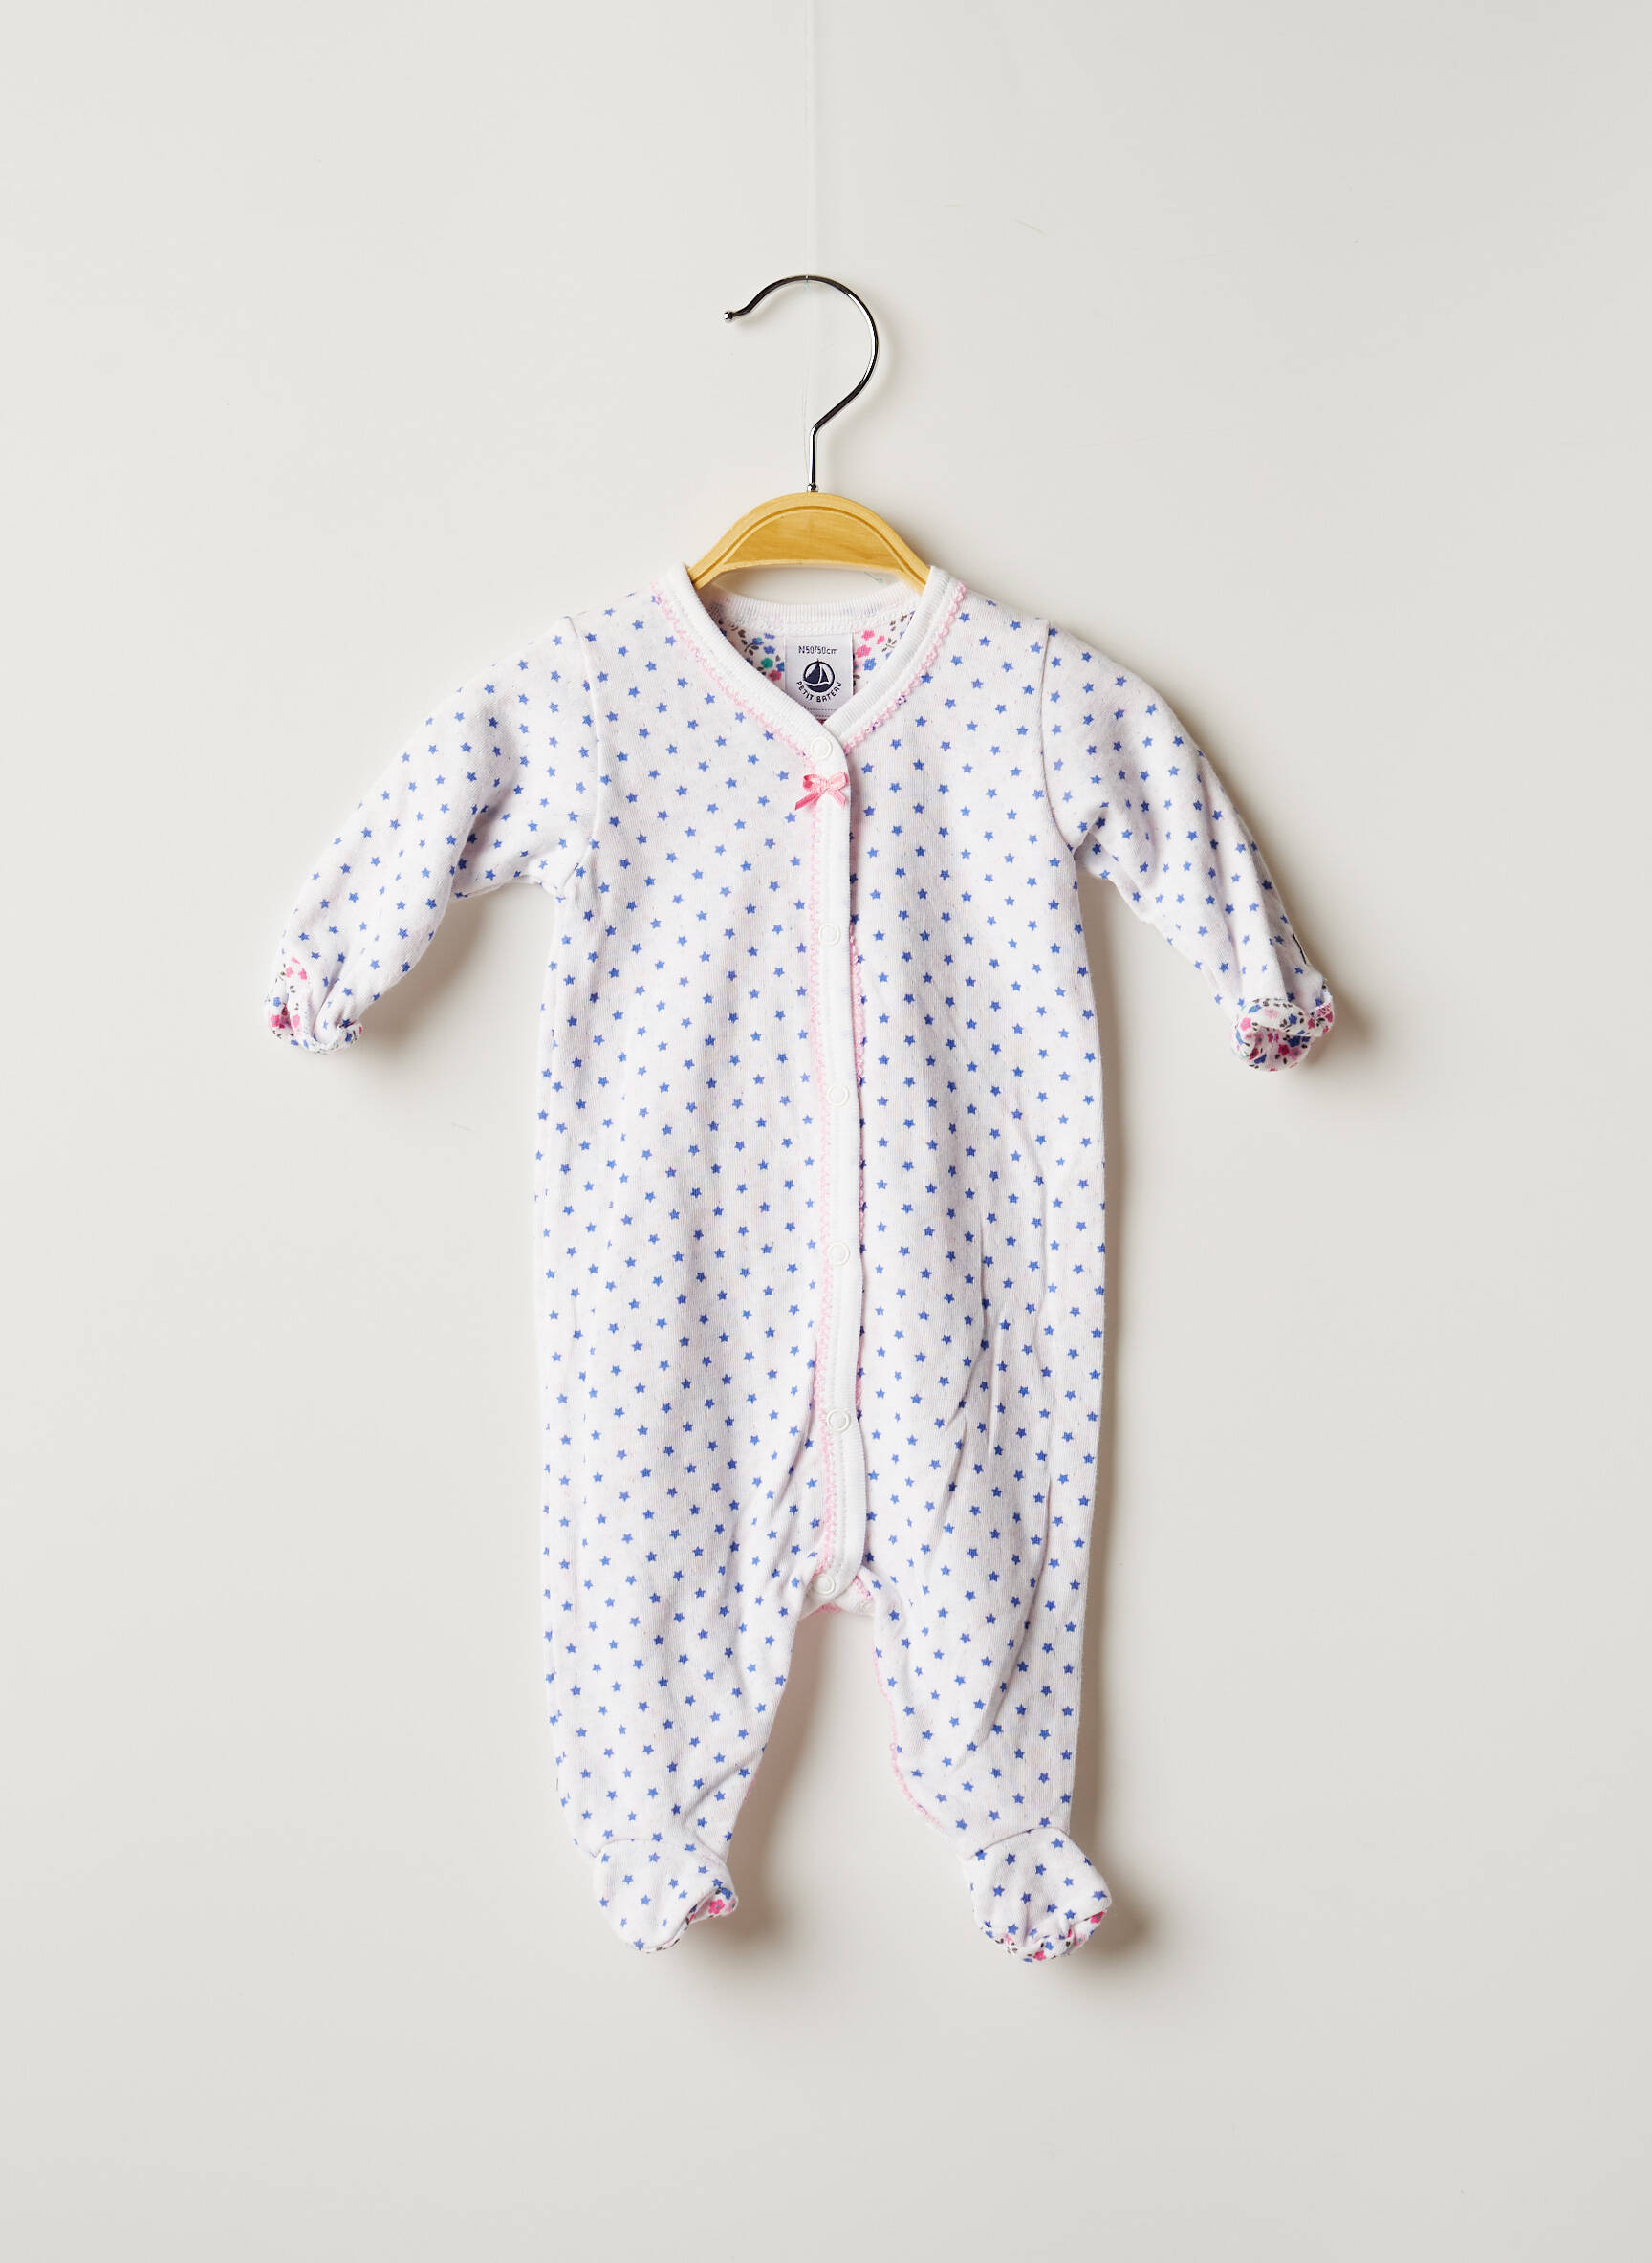 Petit Bateau Pyjamas 1 Fille De Couleur Bleu 2237183-bleu00 - Modz